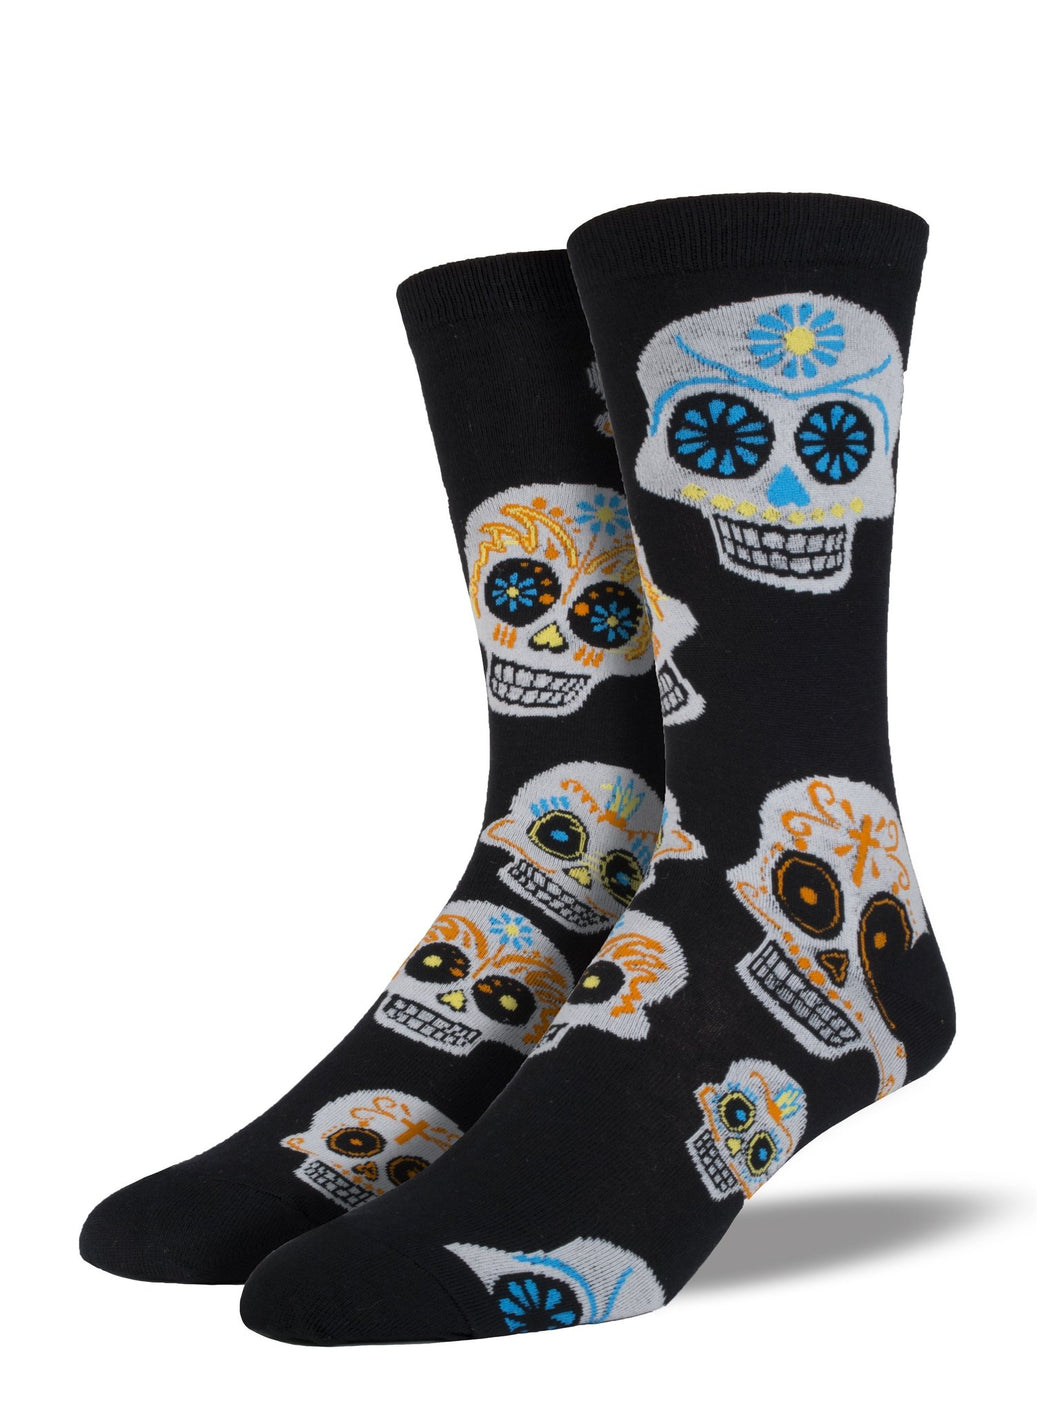 Big Muertos Sugar Skull (Black) Men's Funky Socks